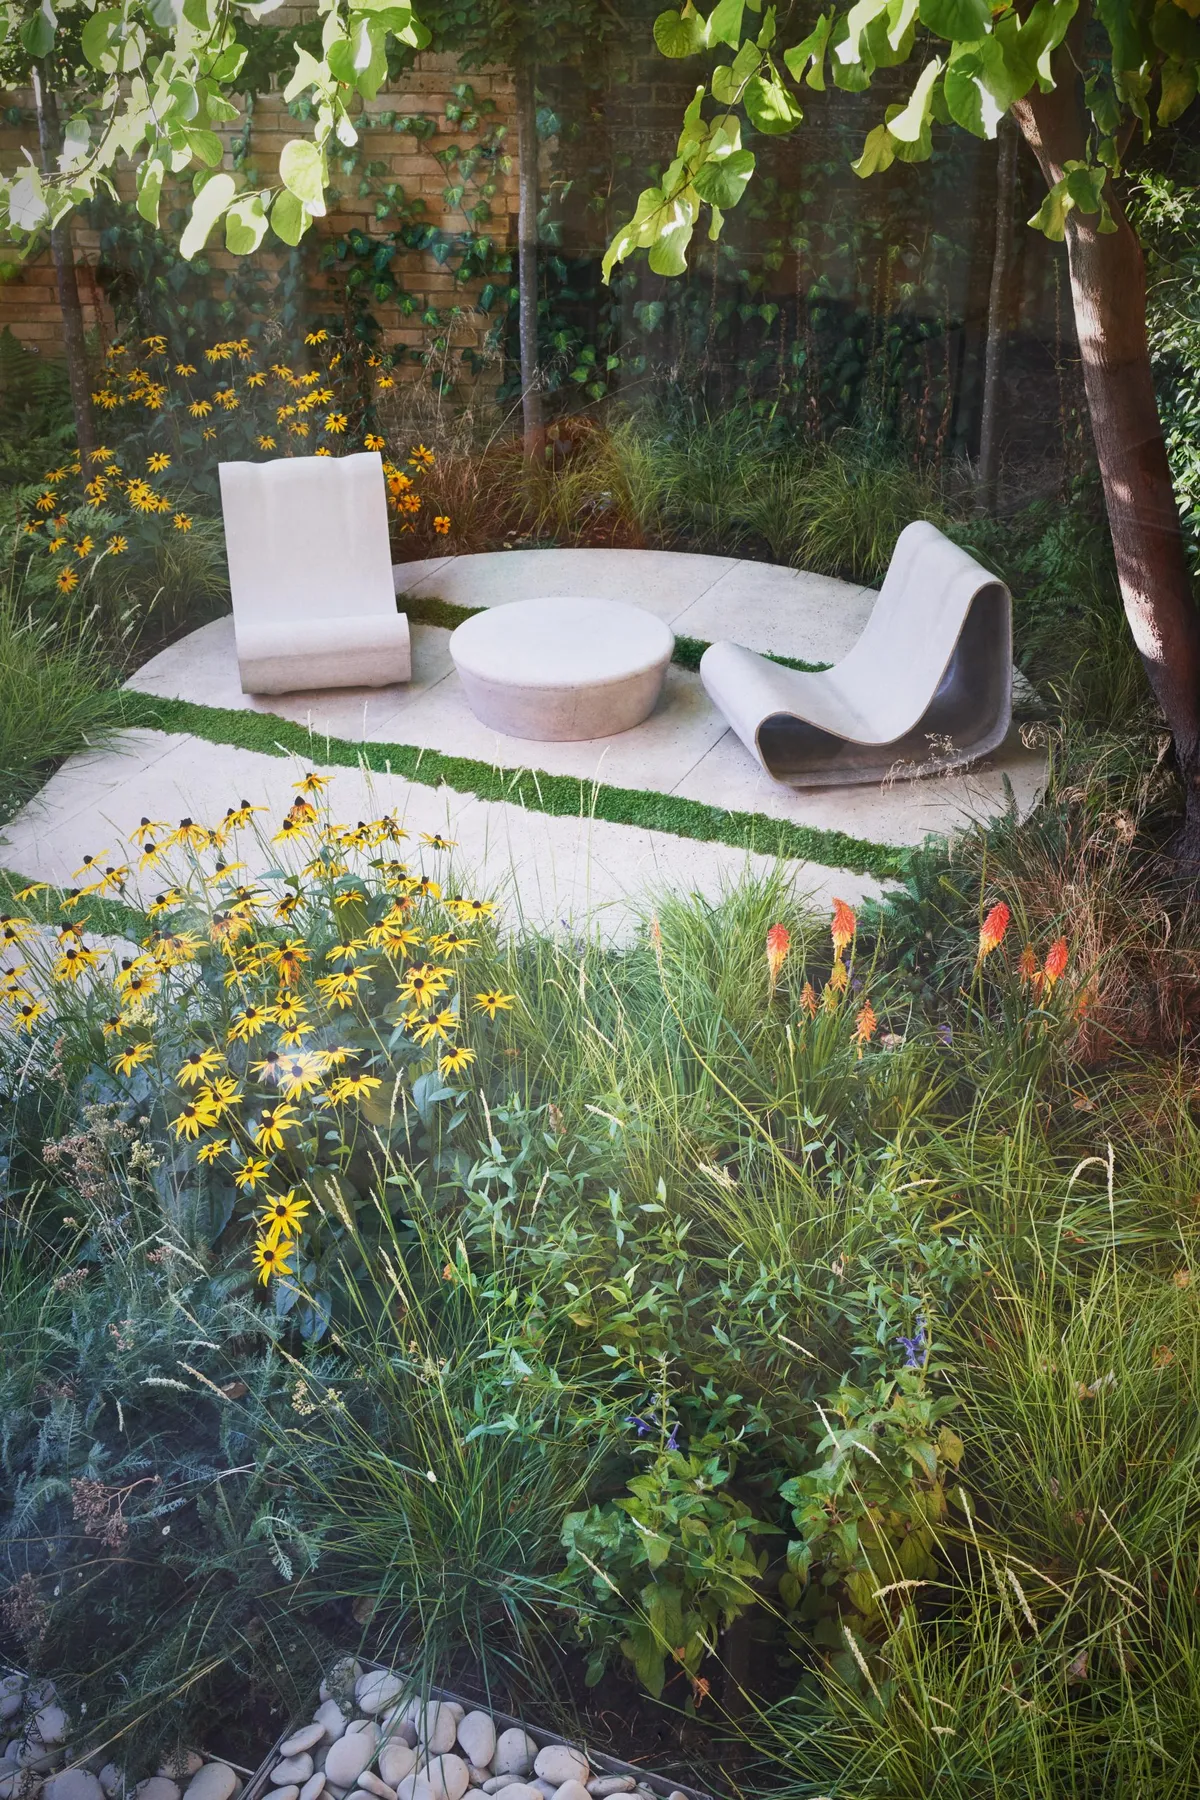 A south London garden designed by Sheila Jack